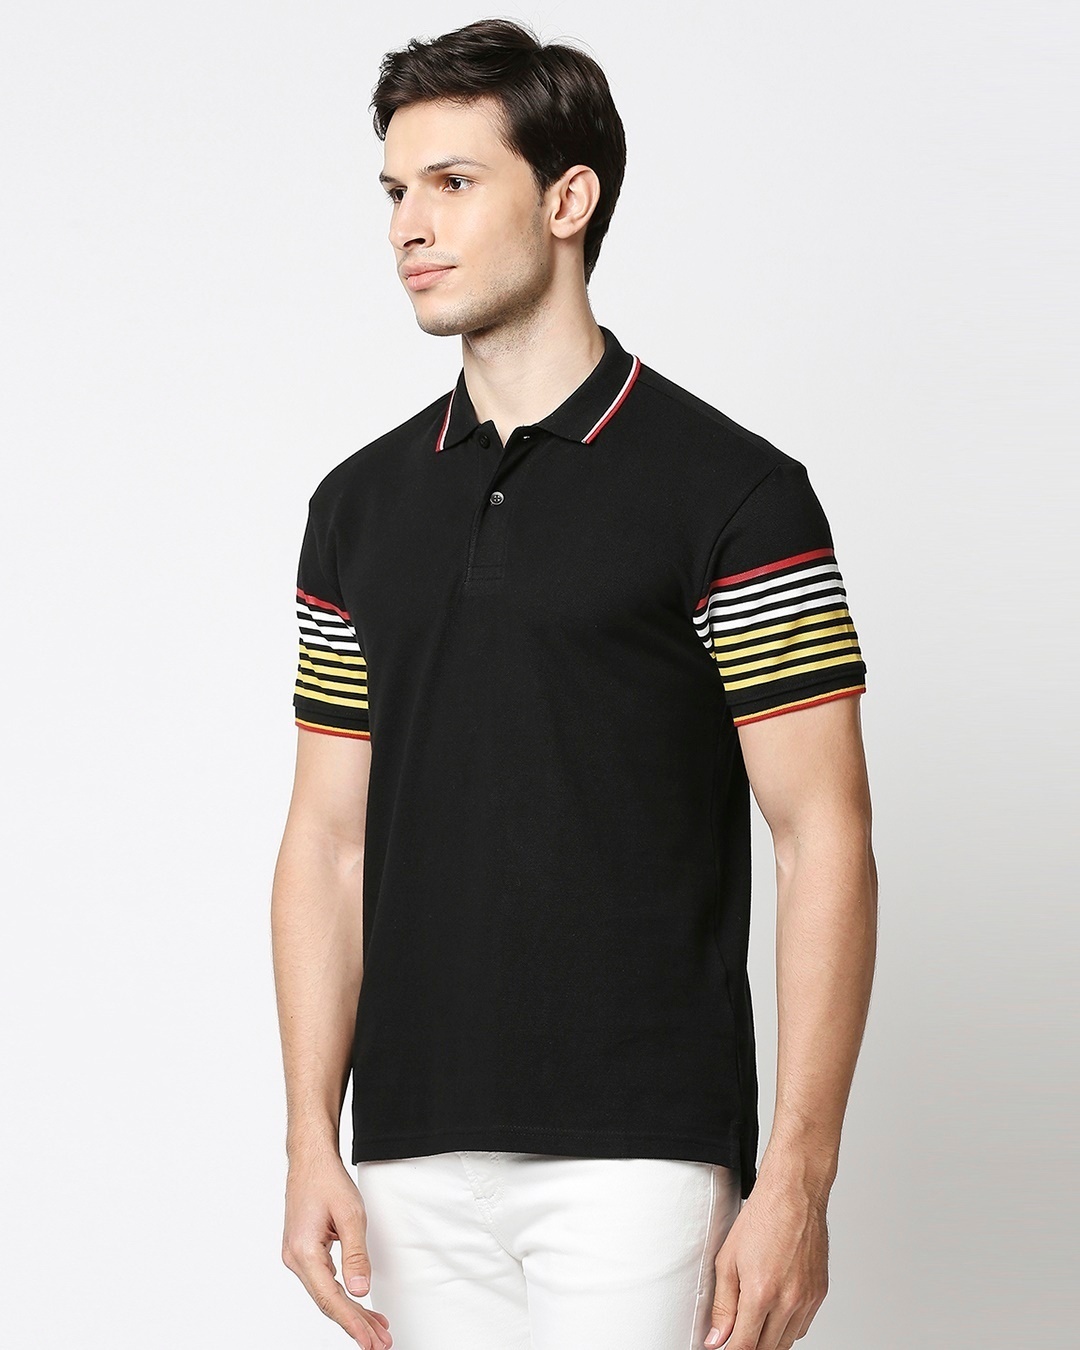 Shop Black Sleeves Stripe Polo T-Shirt-Design